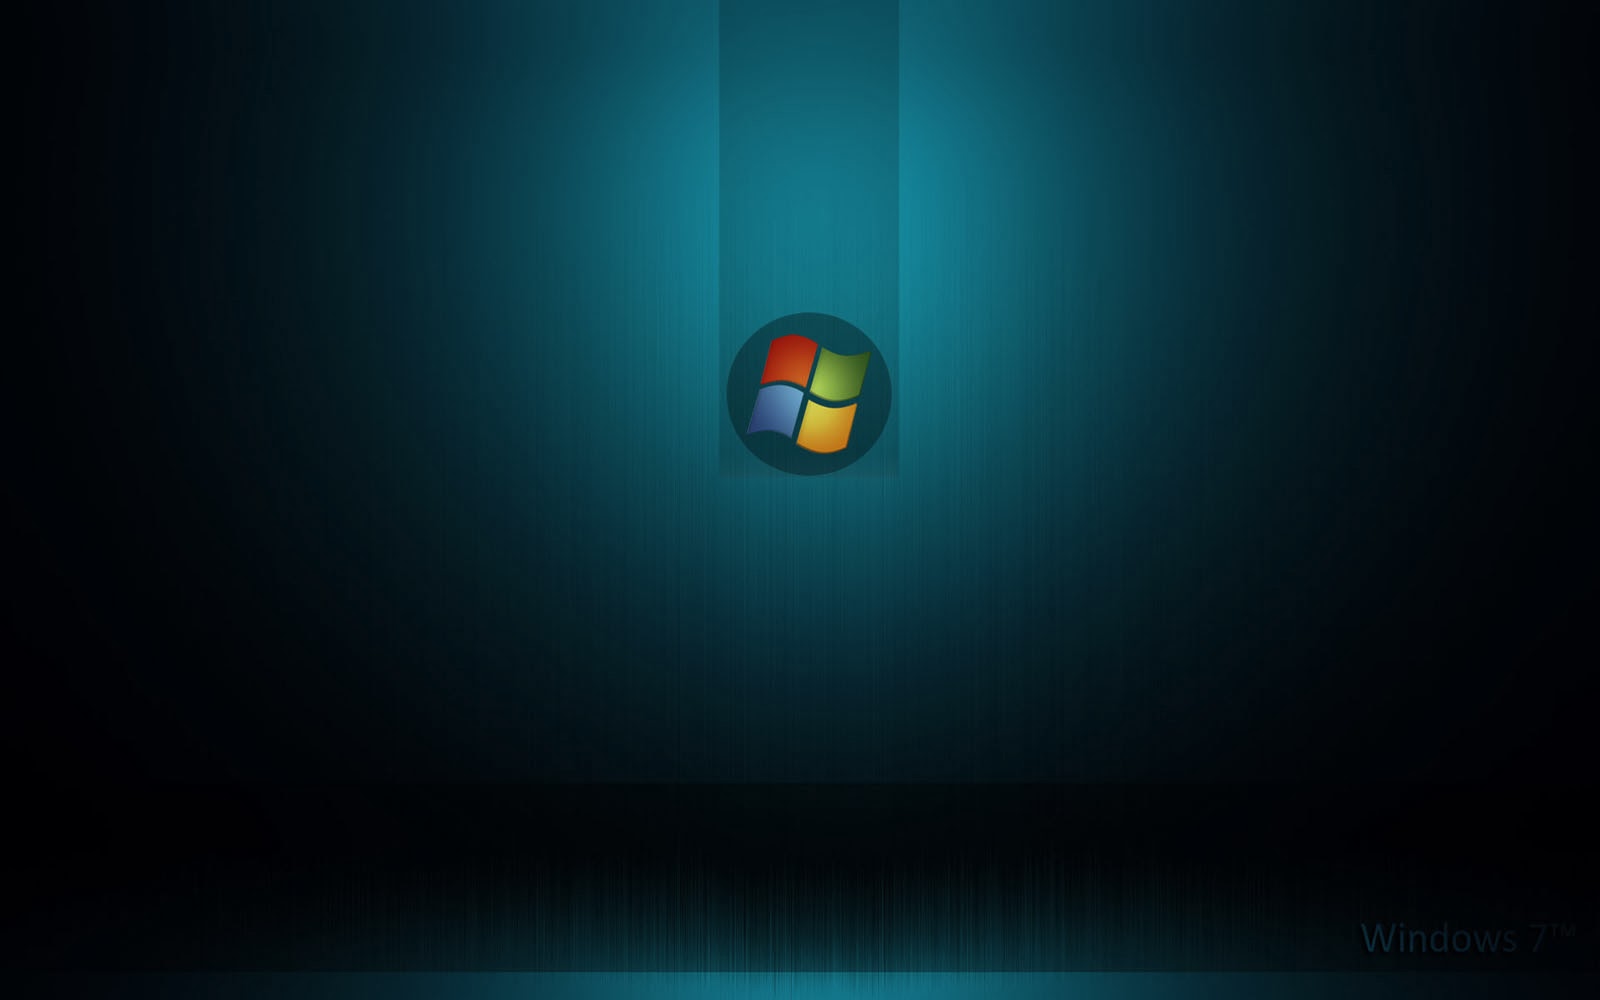  Wallpapers Microsoft Windows Desktop Backgrounds Microsoft Windows